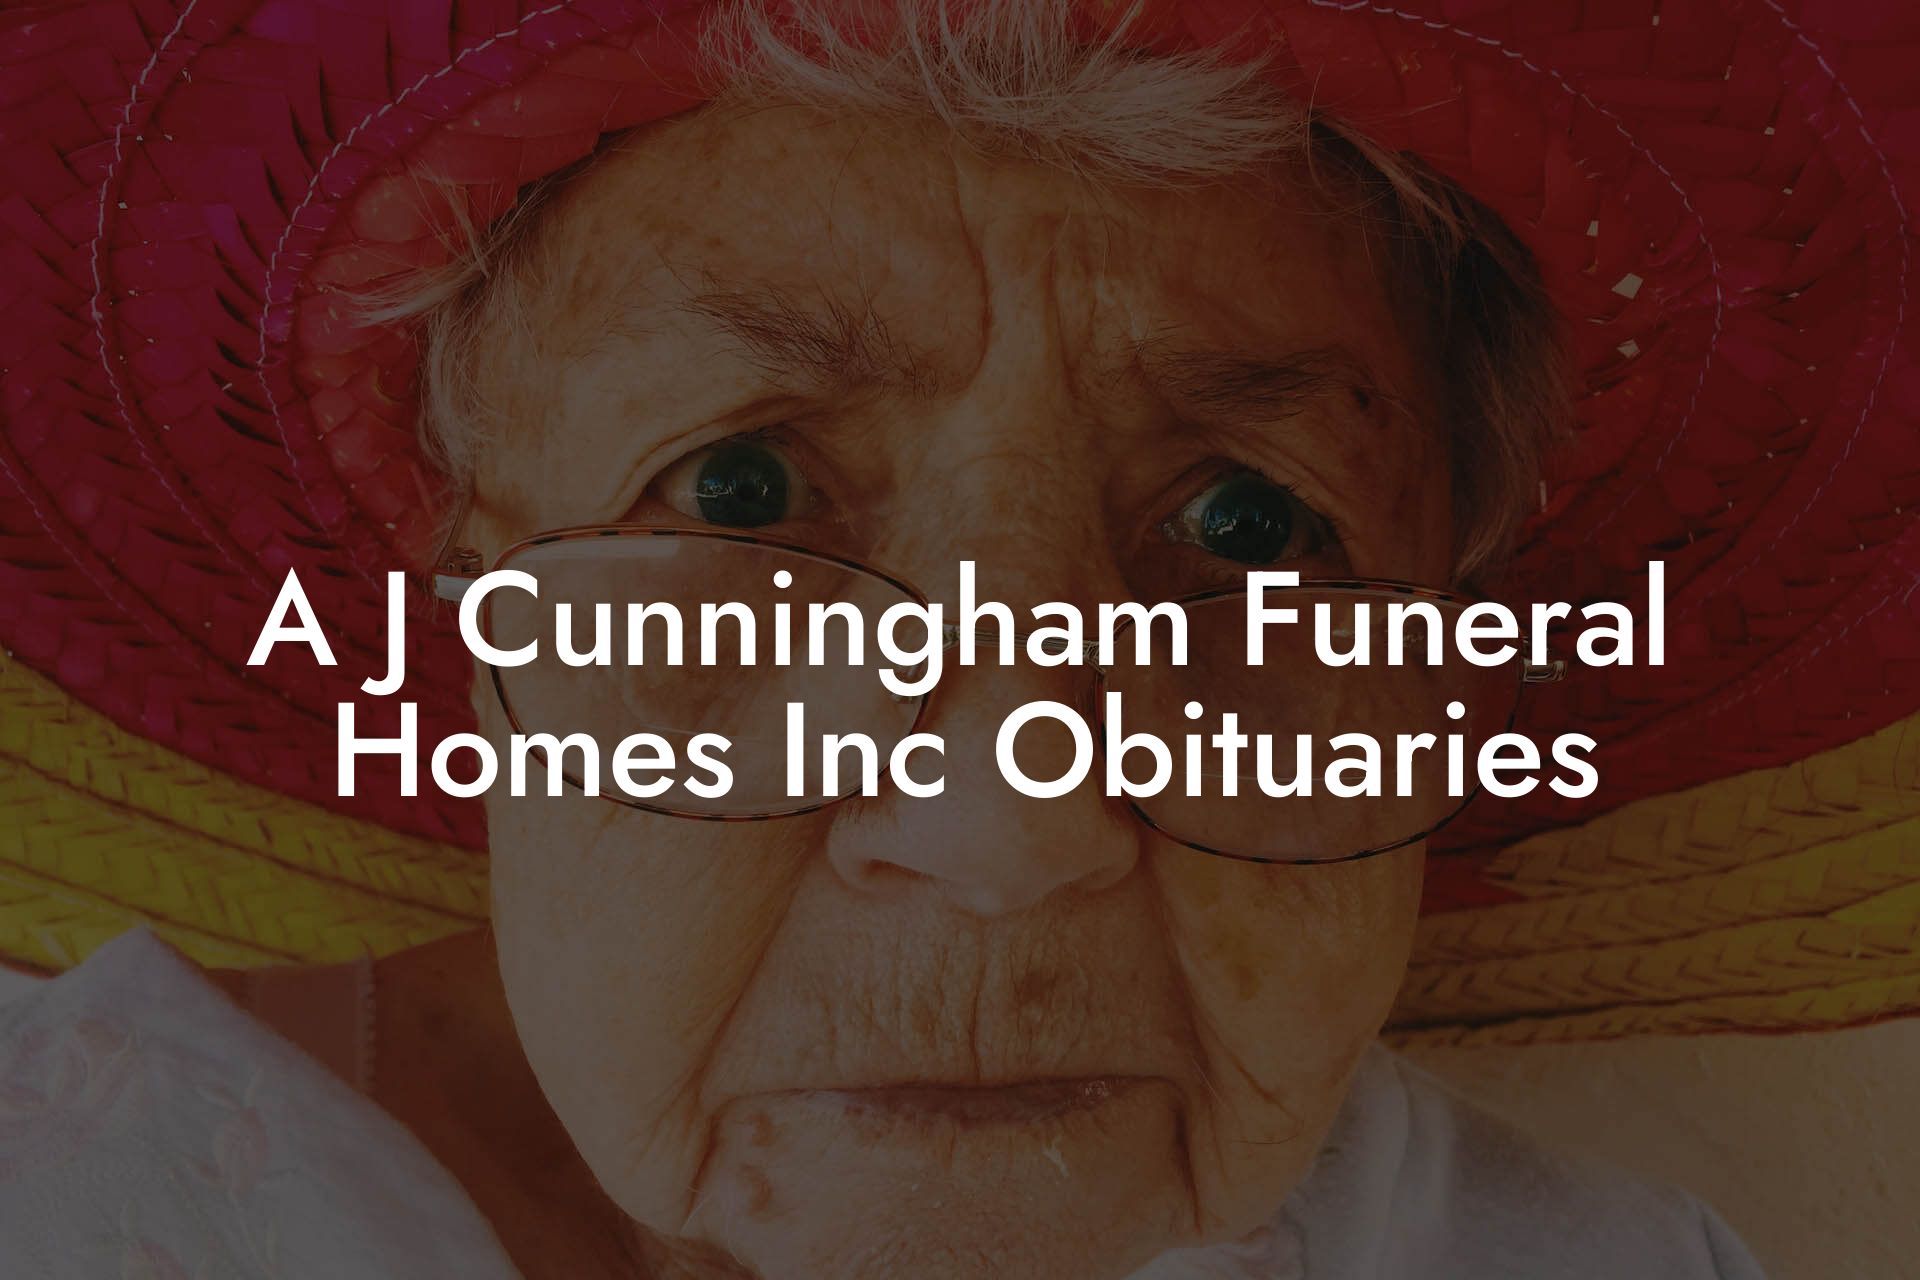 A J Cunningham Funeral Homes Inc Obituaries